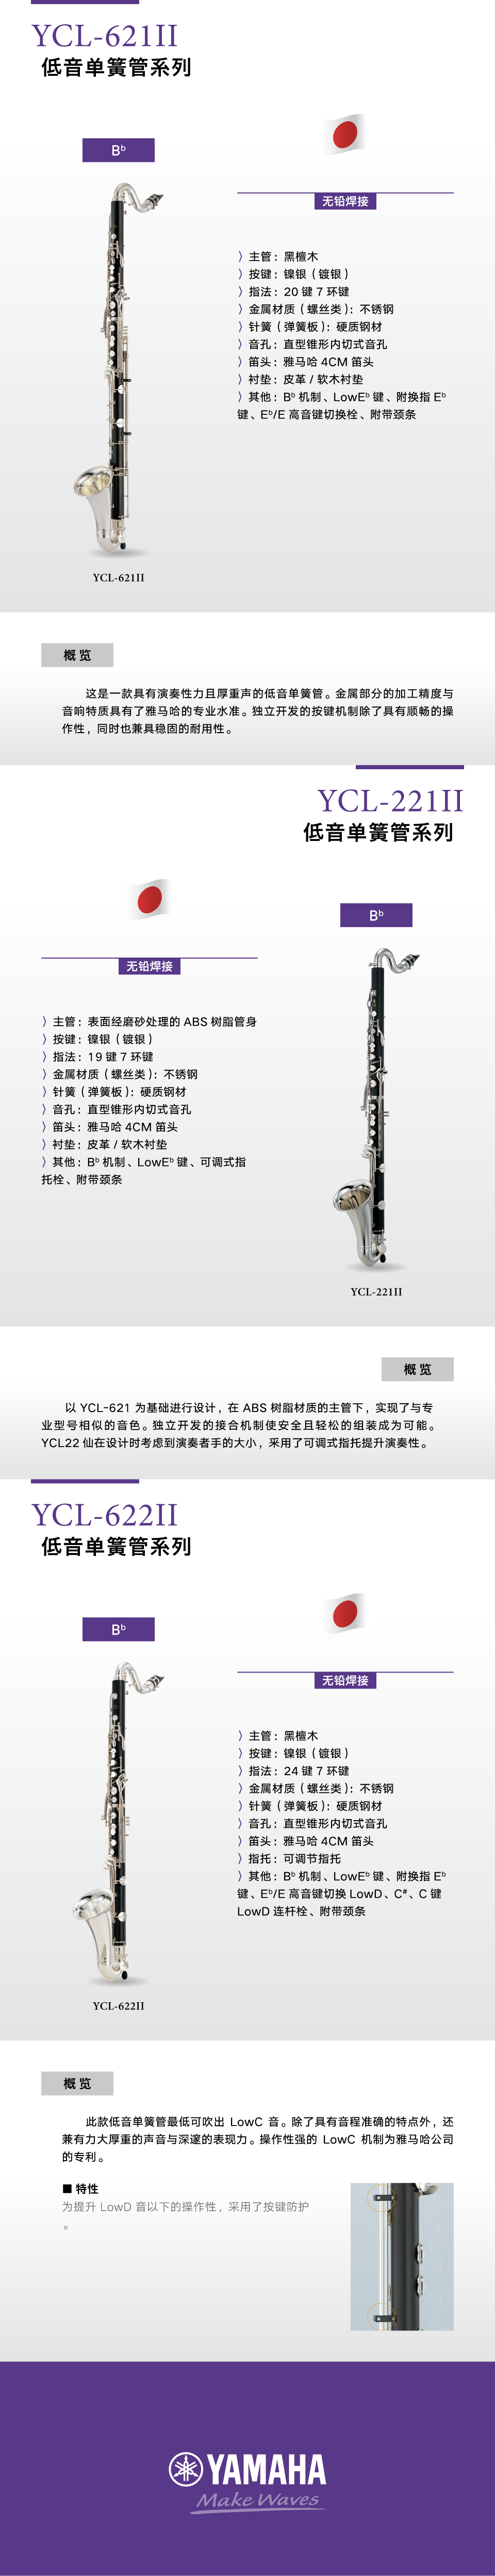 YCL-621II-YCL-221II-YCL-622II_产品参数-1.png